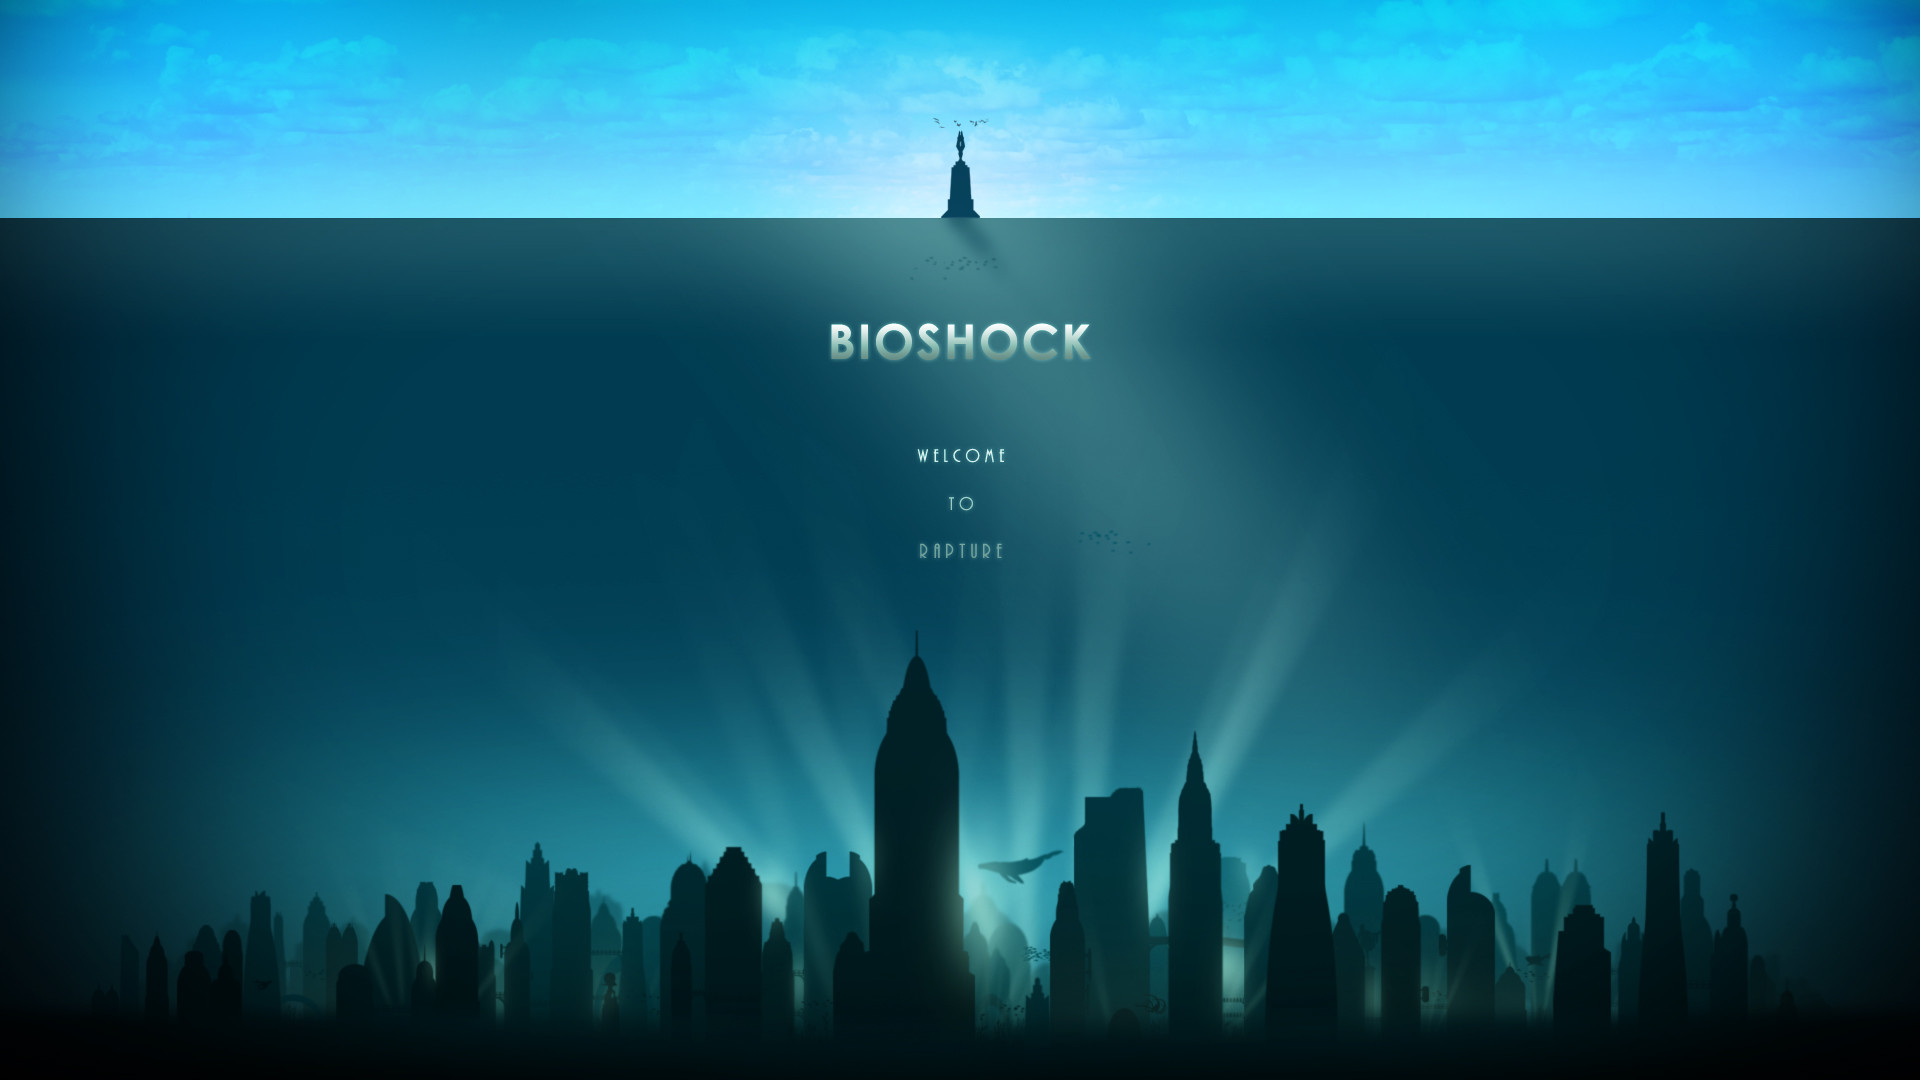 1920x1080 Bioshock HD Wallpapers Backgrounds Wallpaper | HD Wallpapers | Pinterest |  Bioshock, Bioshock rapture and Hd wallpaper